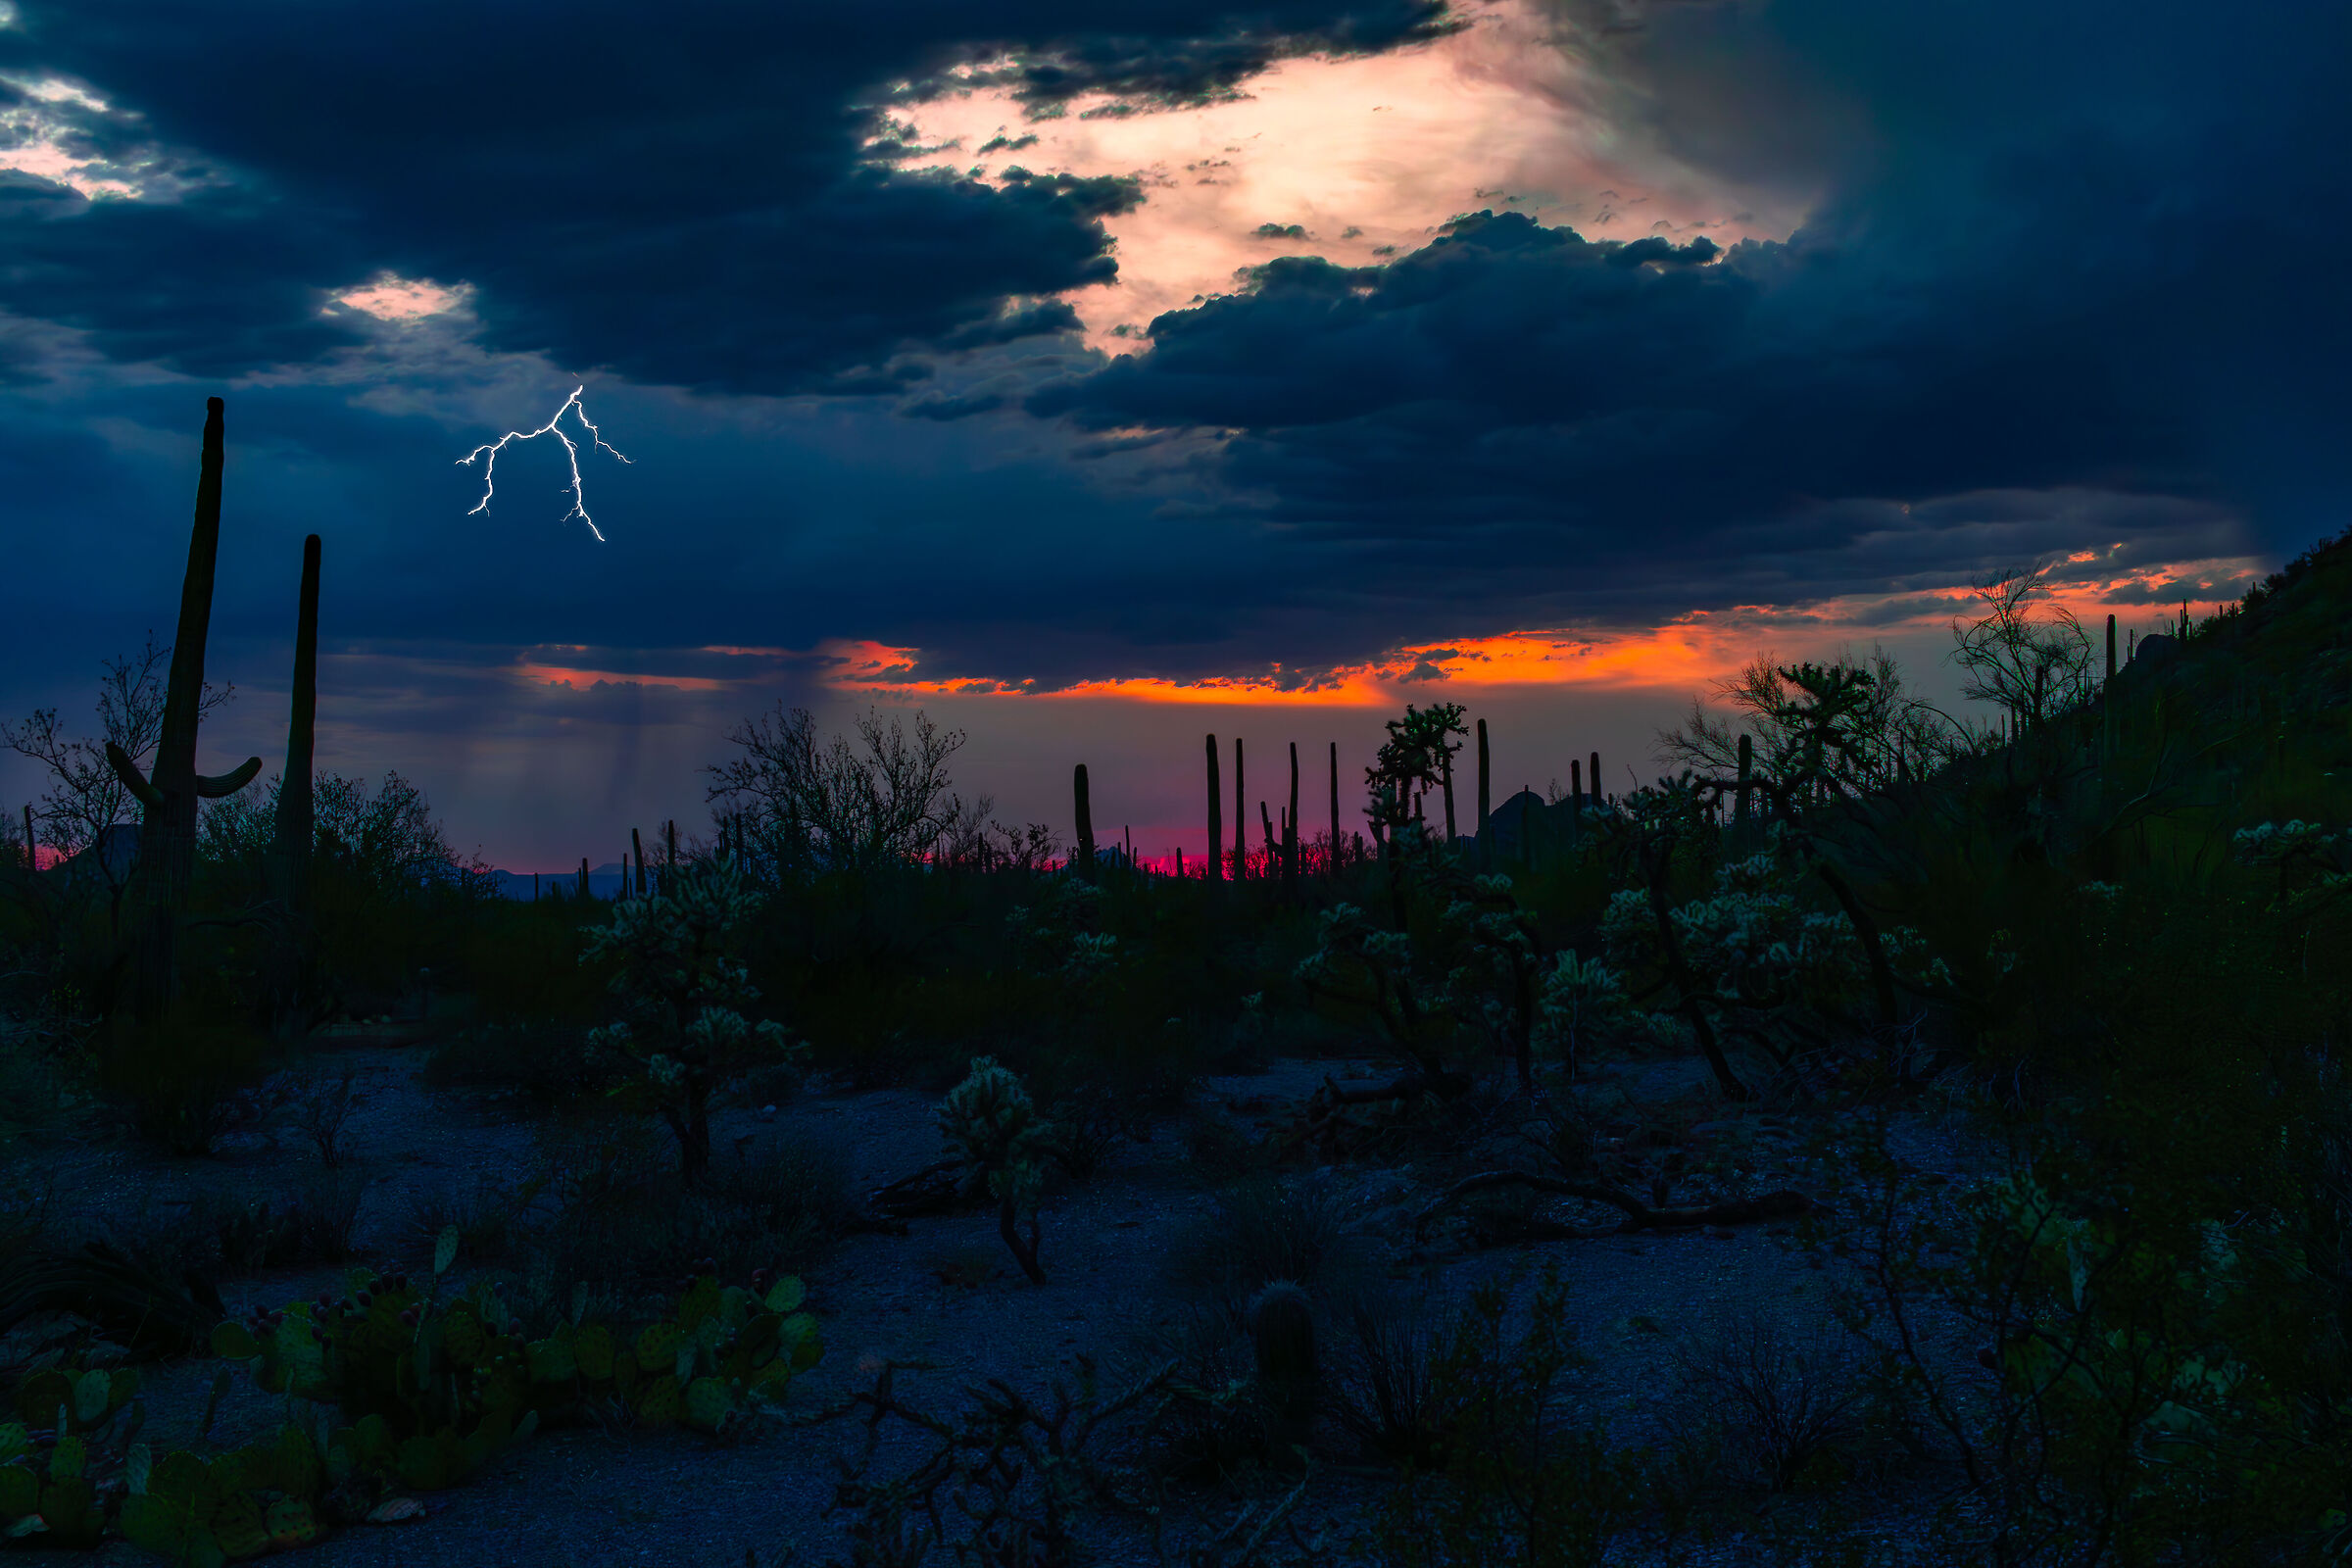 Storm in the desert...